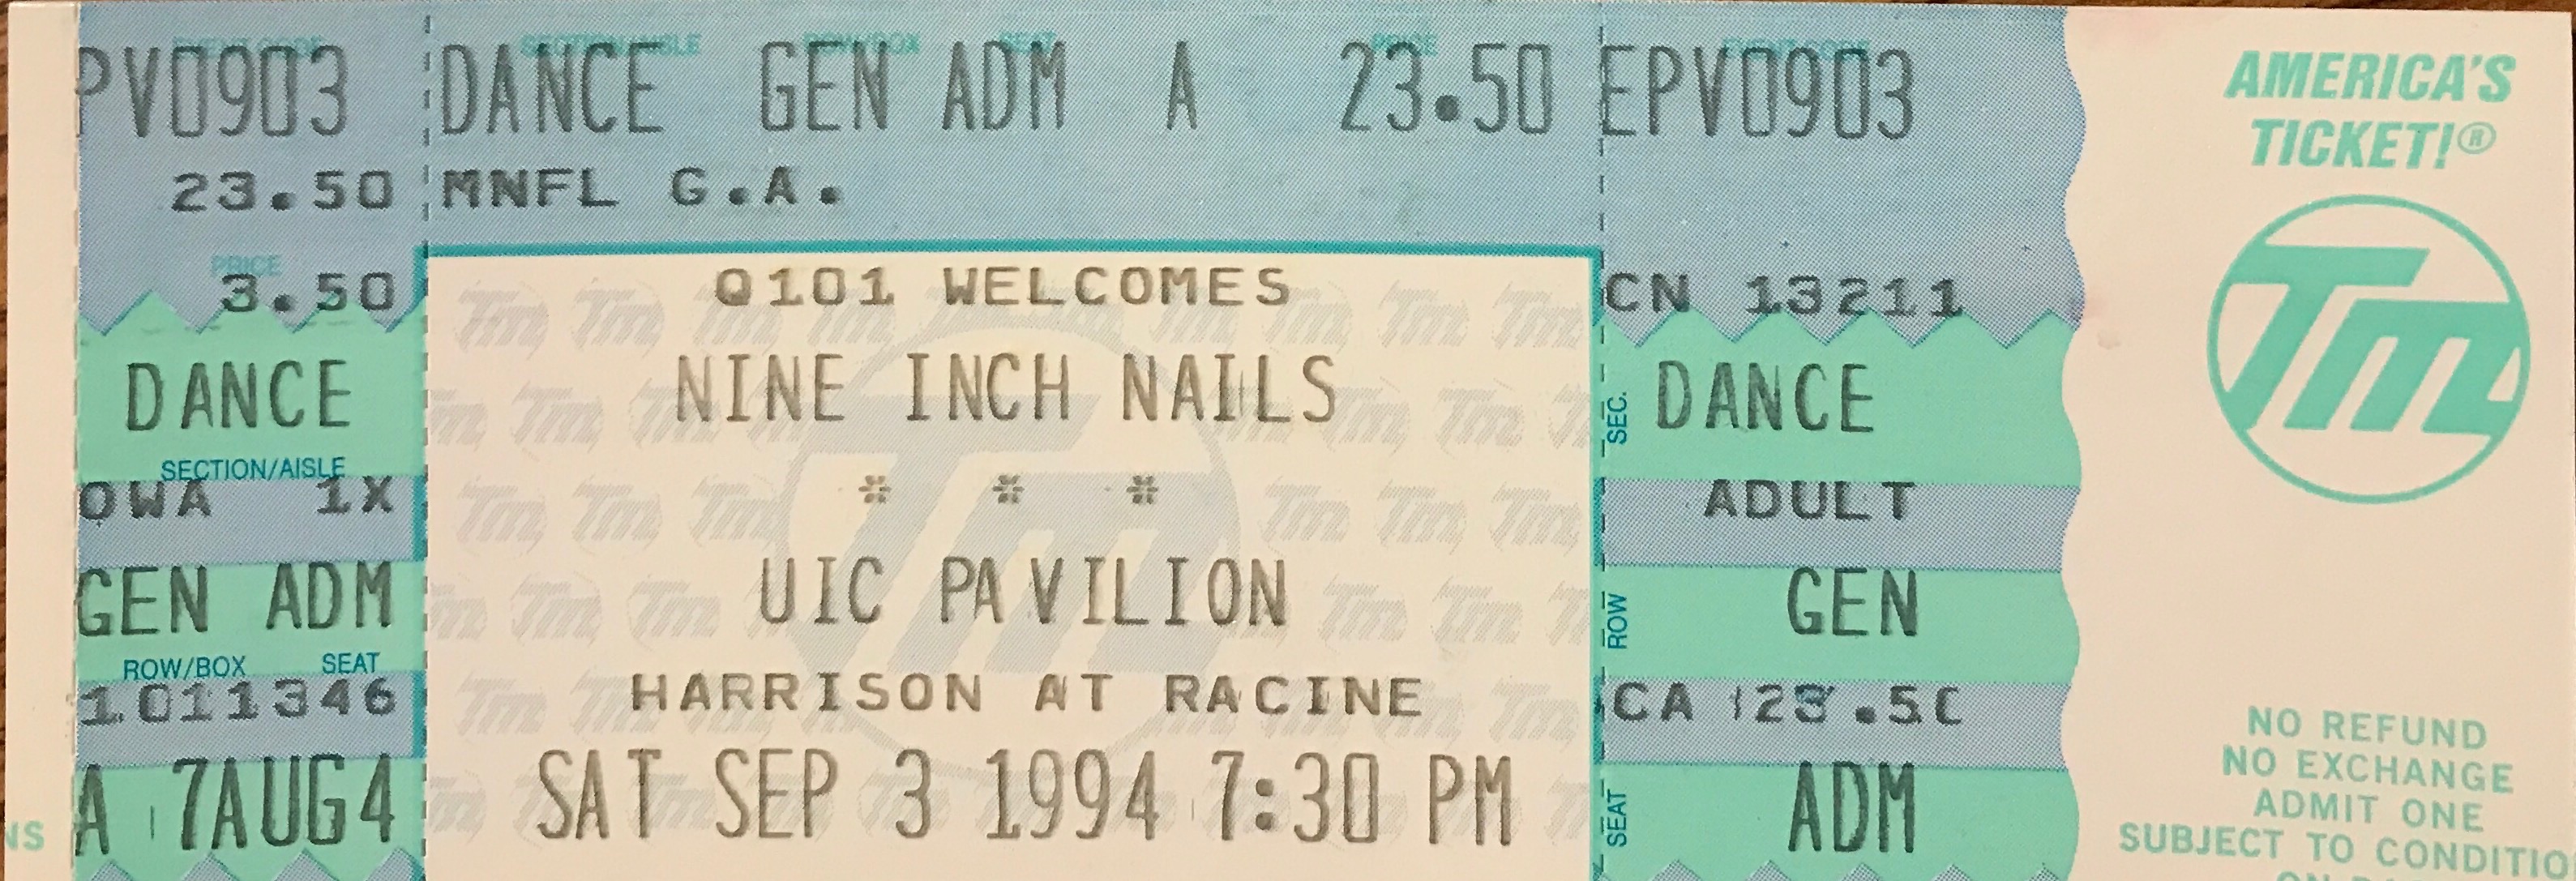 09/03/1994 ticket